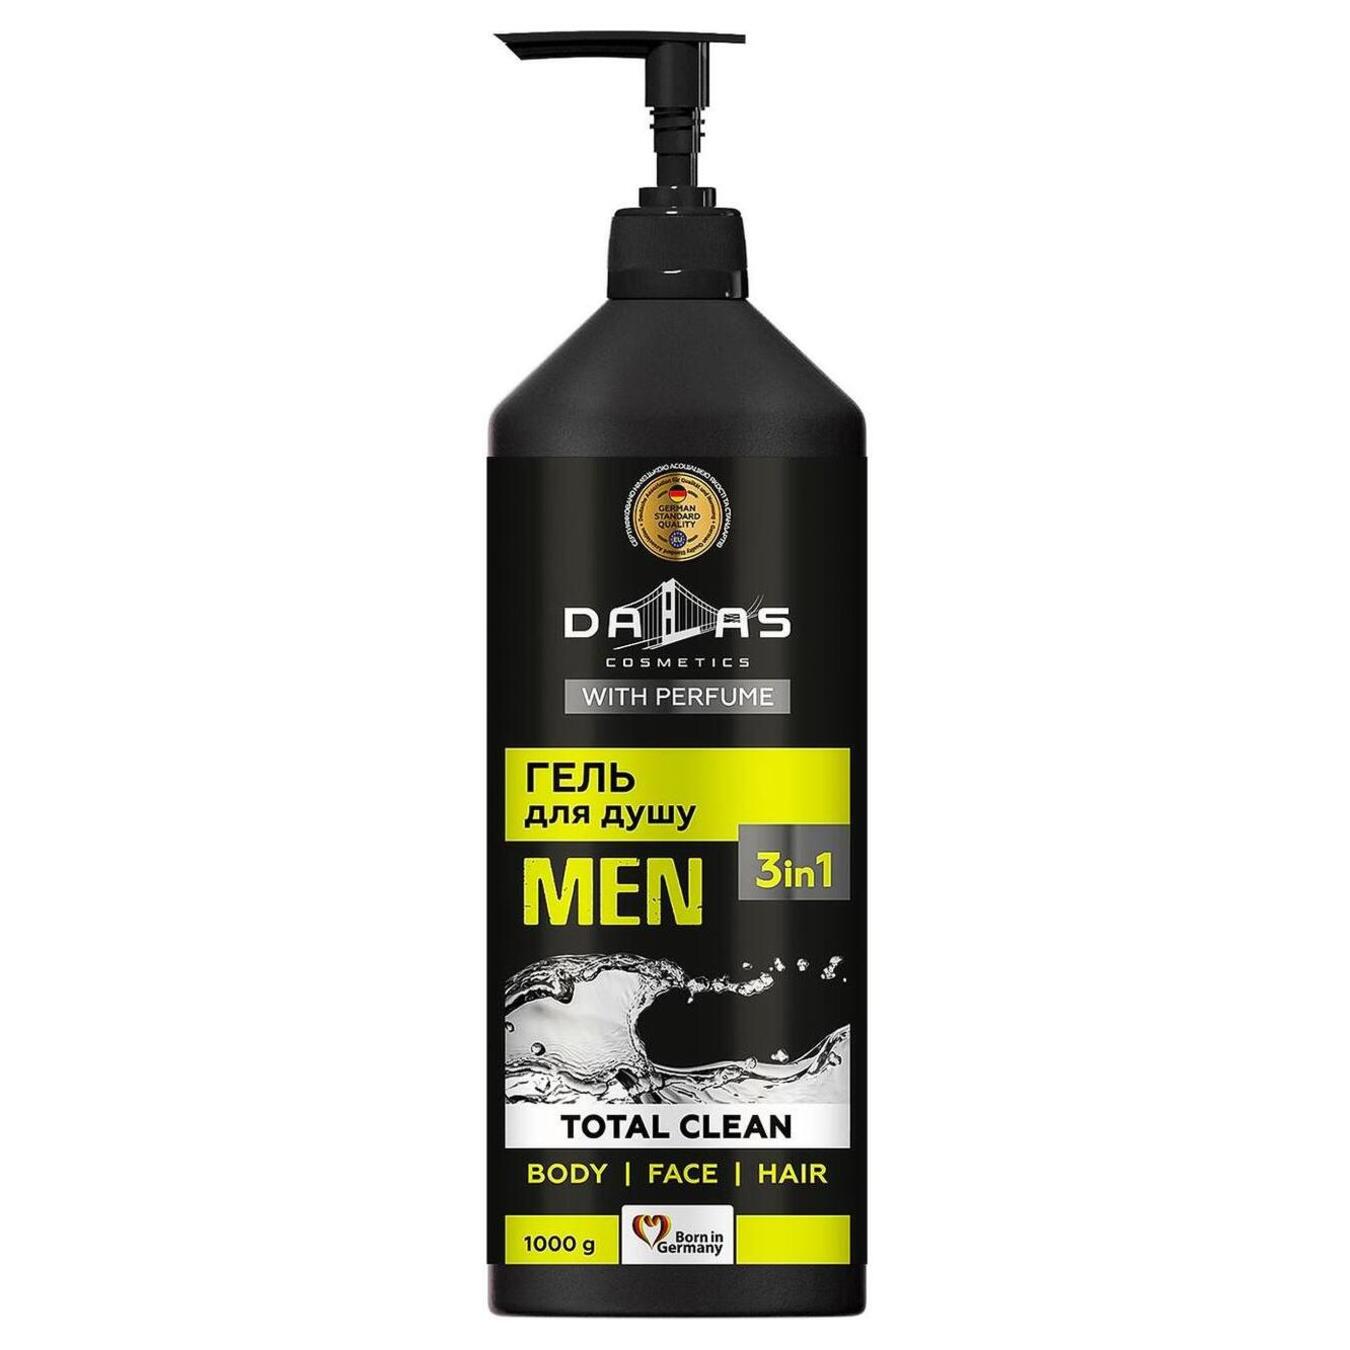 Men's shower gel shampoo DALAS 3 in 1 total clean 1000g